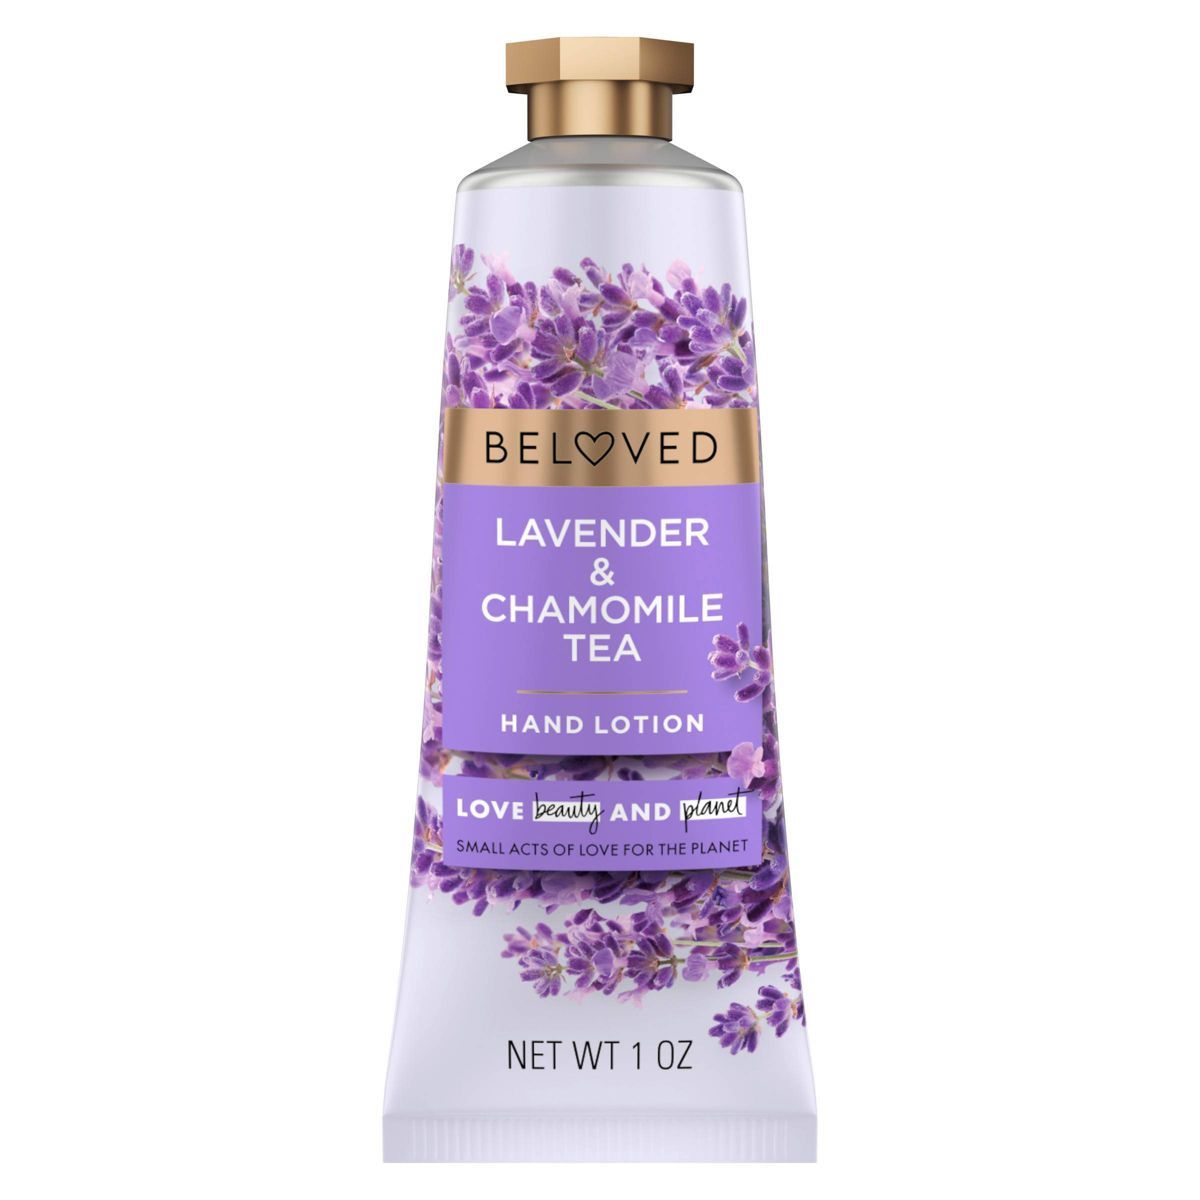 Beloved Lavender and Chamomile Hand Lotion - 1oz | Target